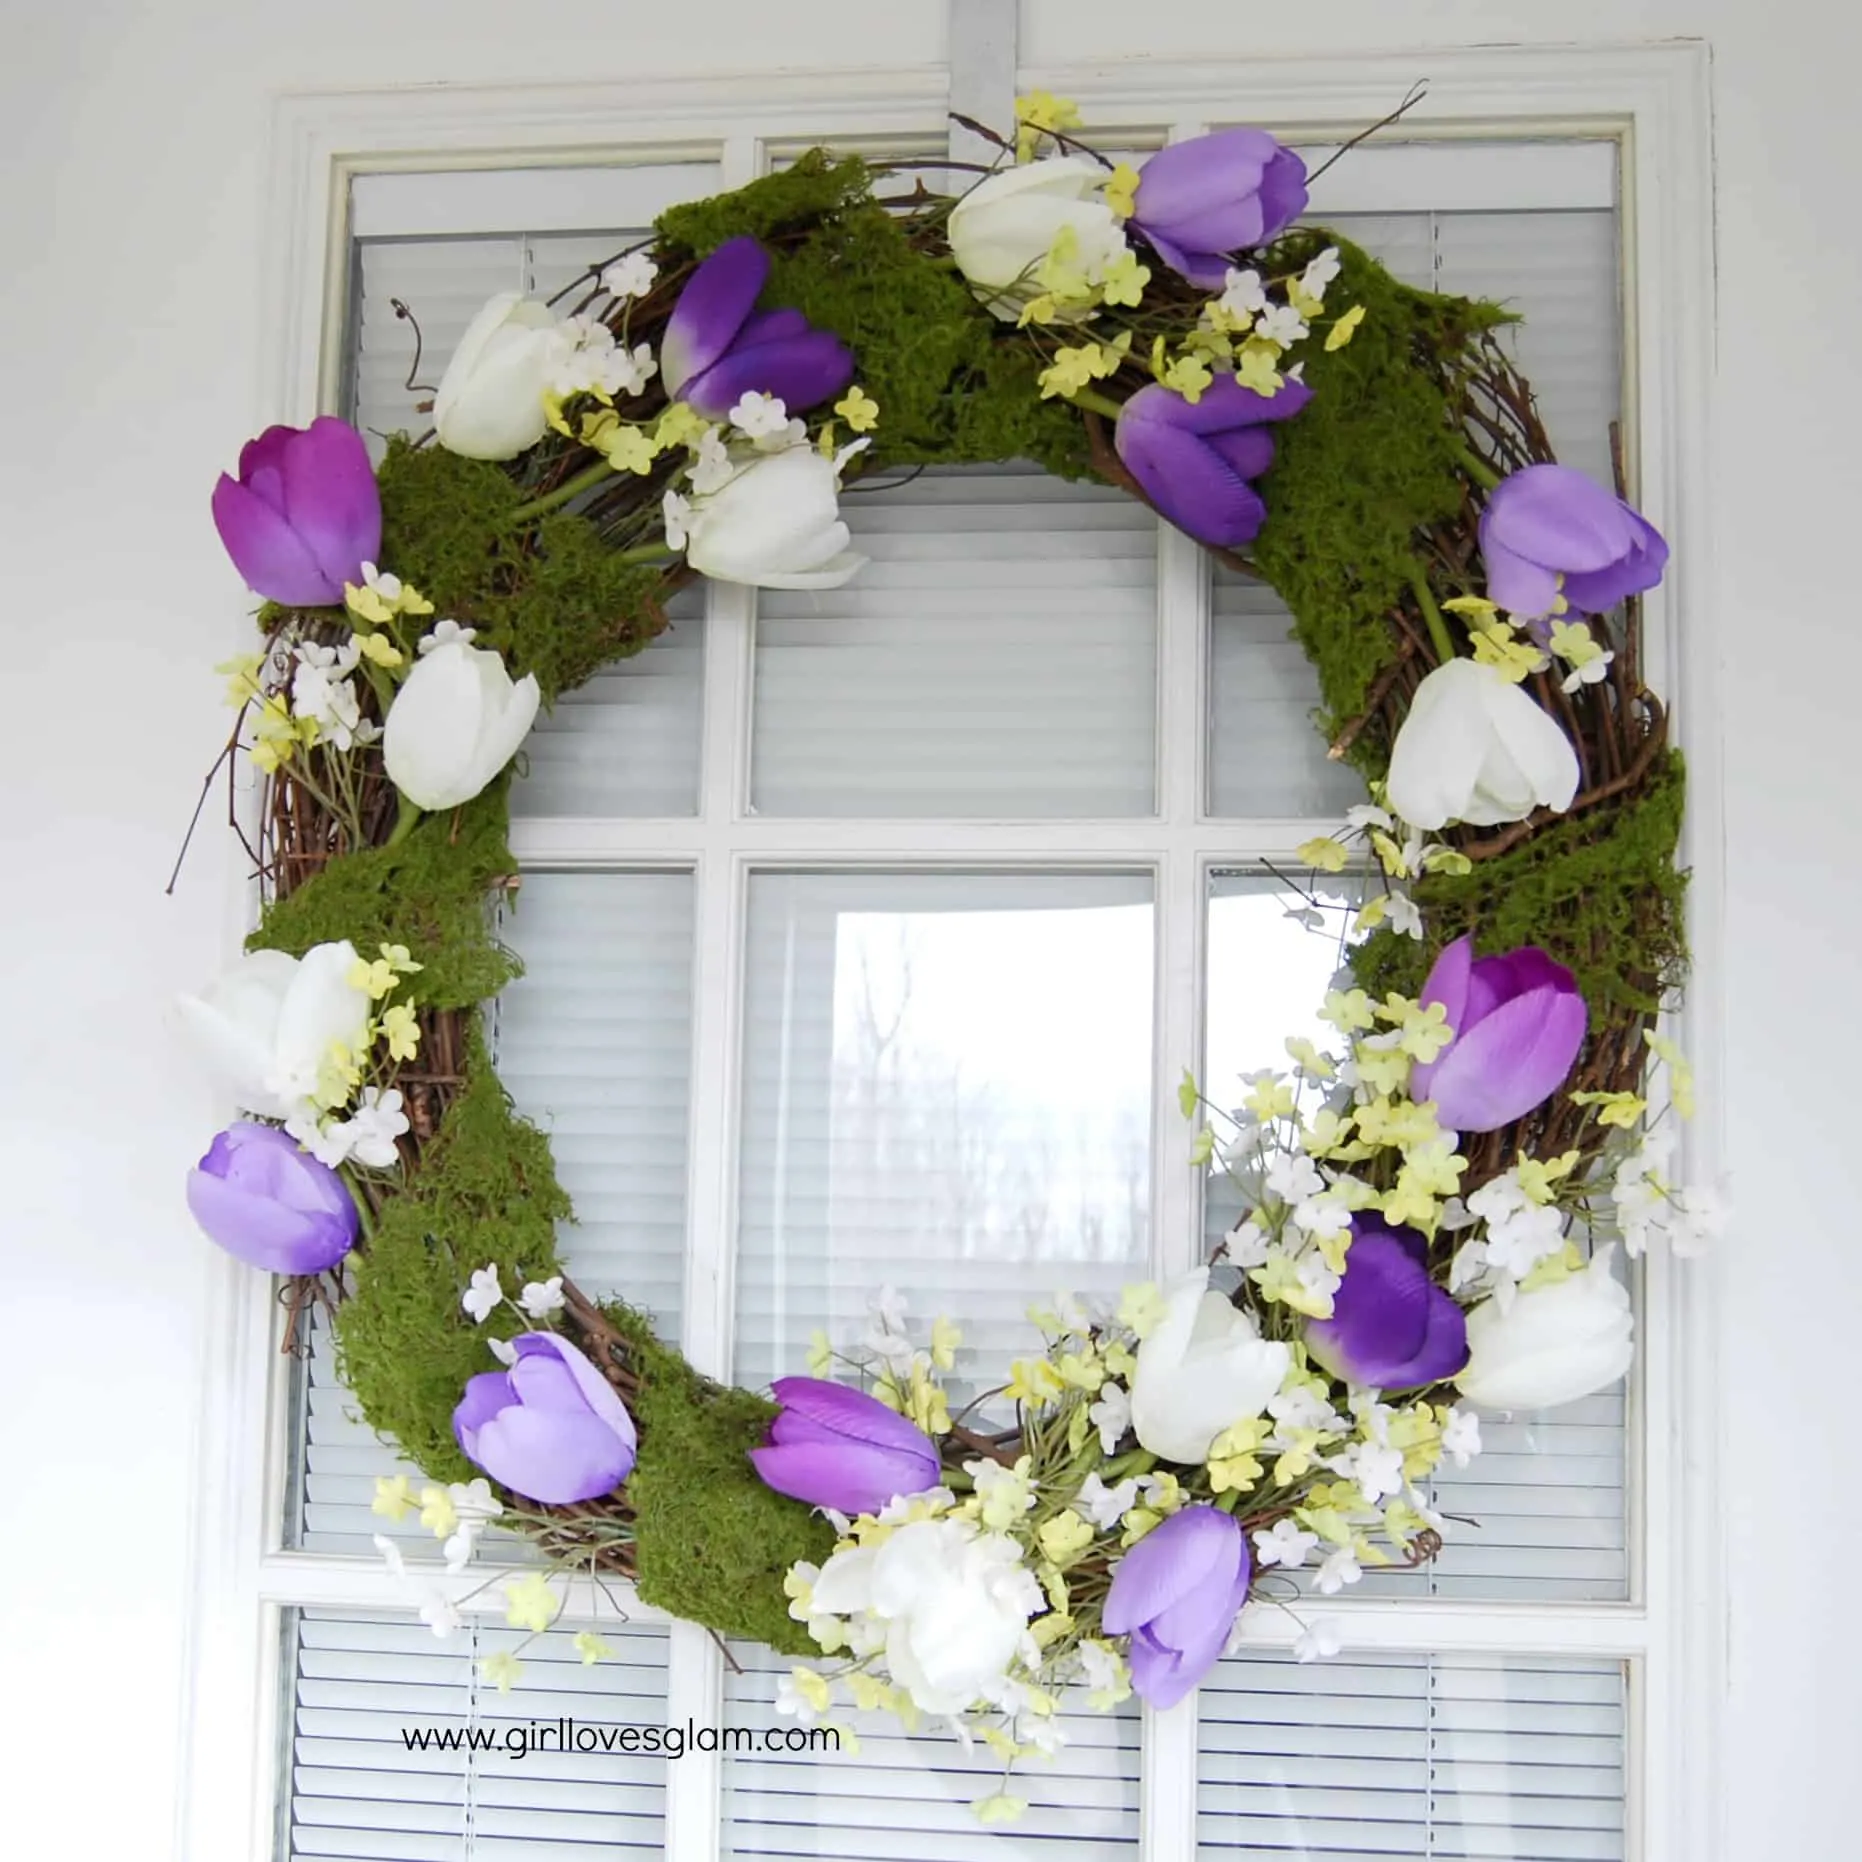 DIY Spring Wreath on www.girllovesglam.com #decor #spring #diy